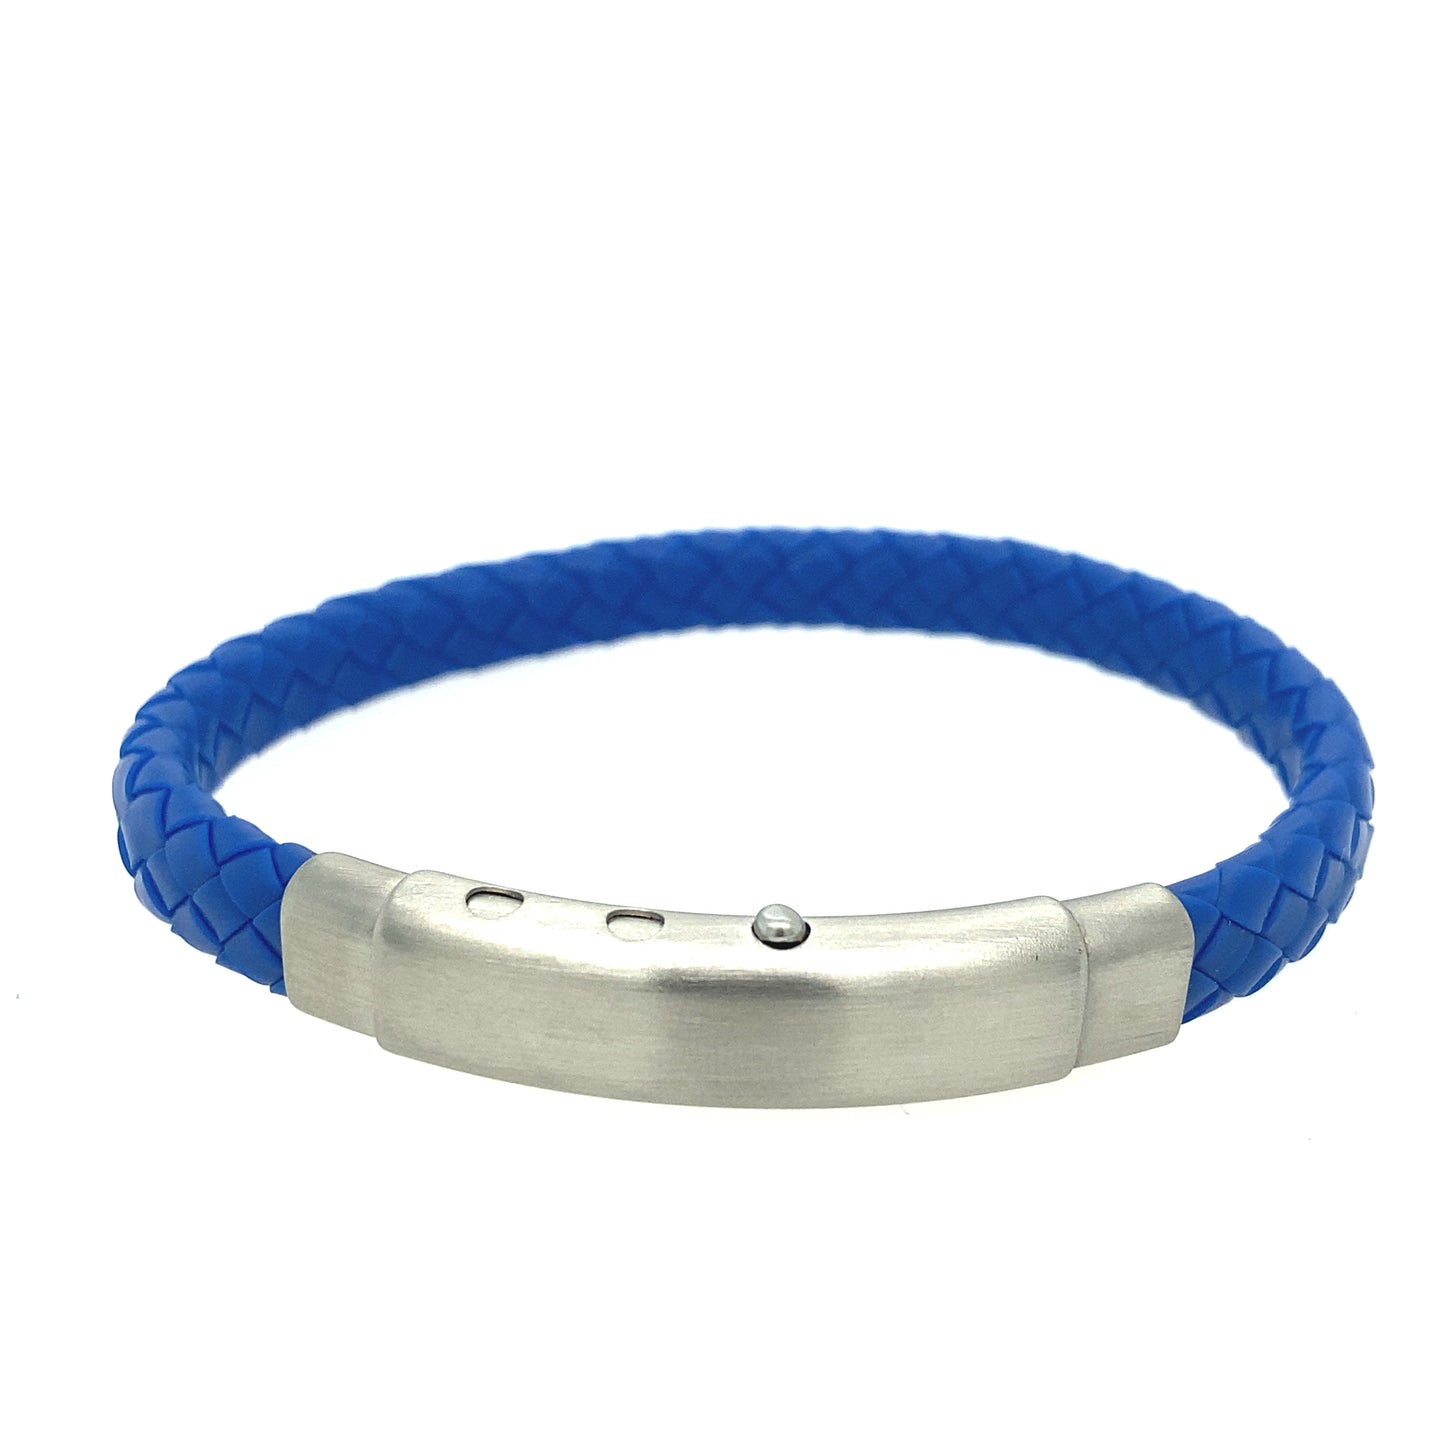 Braided Rubber and Steel Adjustable Clasp Bracelet | BORSARI | Luby 